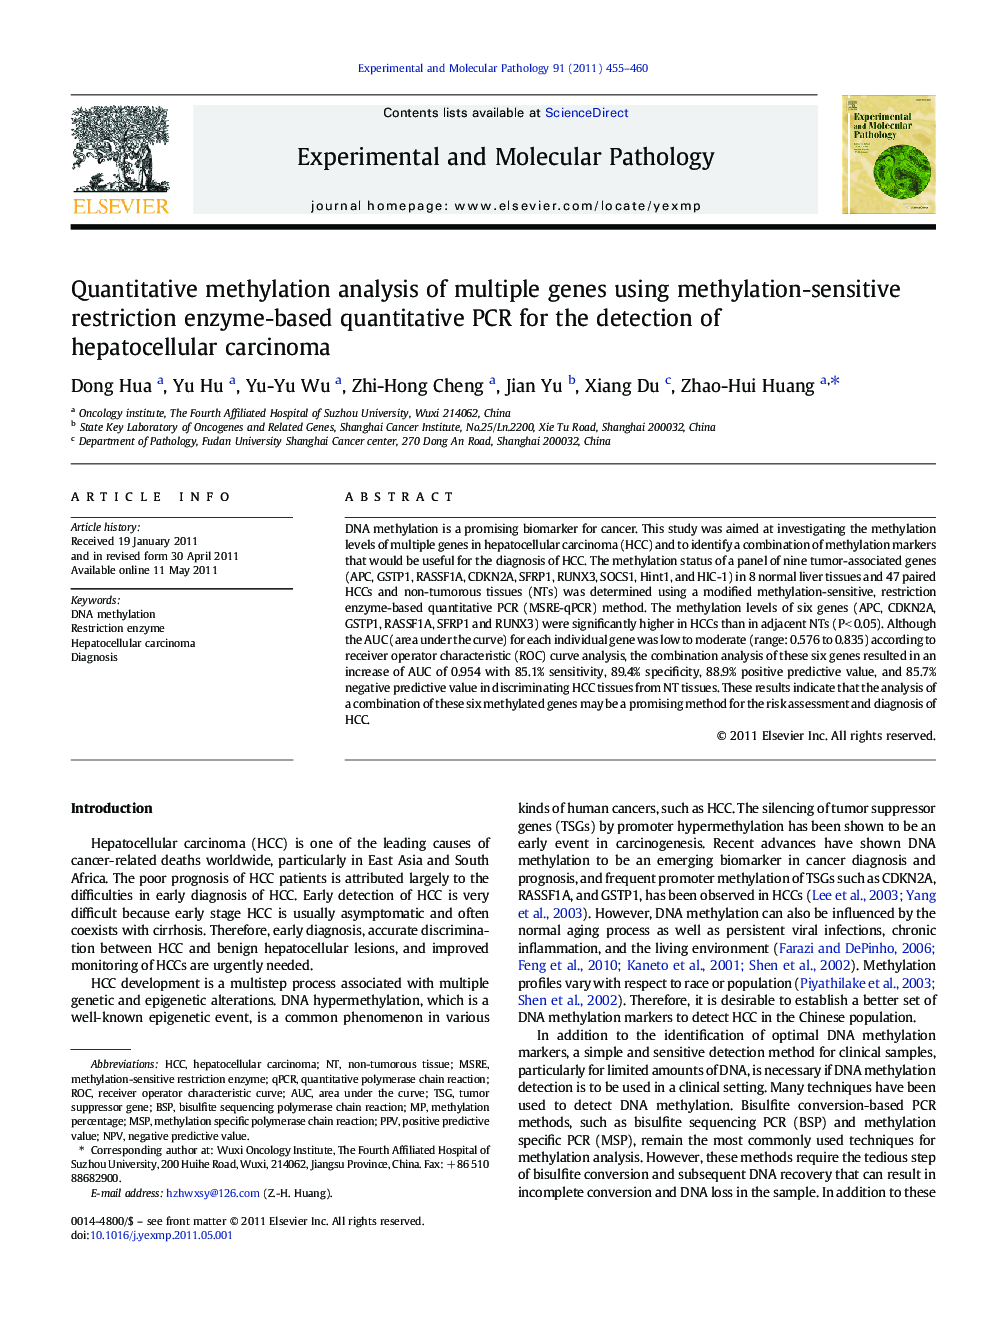 Quantitative methylation analysis of multiple genes using methylation-sensitive restriction enzyme-based quantitative PCR for the detection of hepatocellular carcinoma